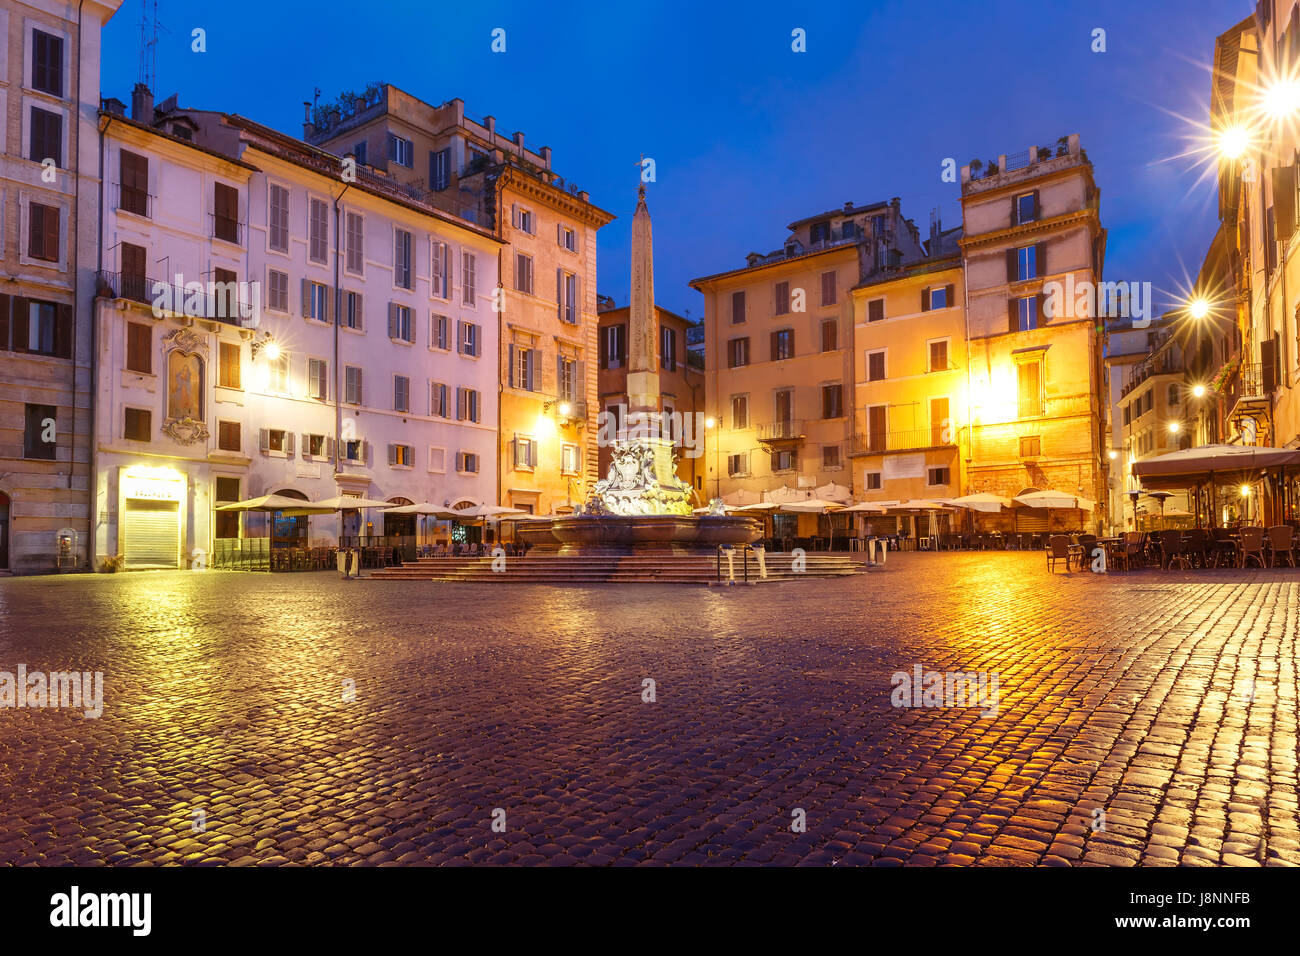 Piazza della Rotonda at night, Rome, Italy Stock Photo